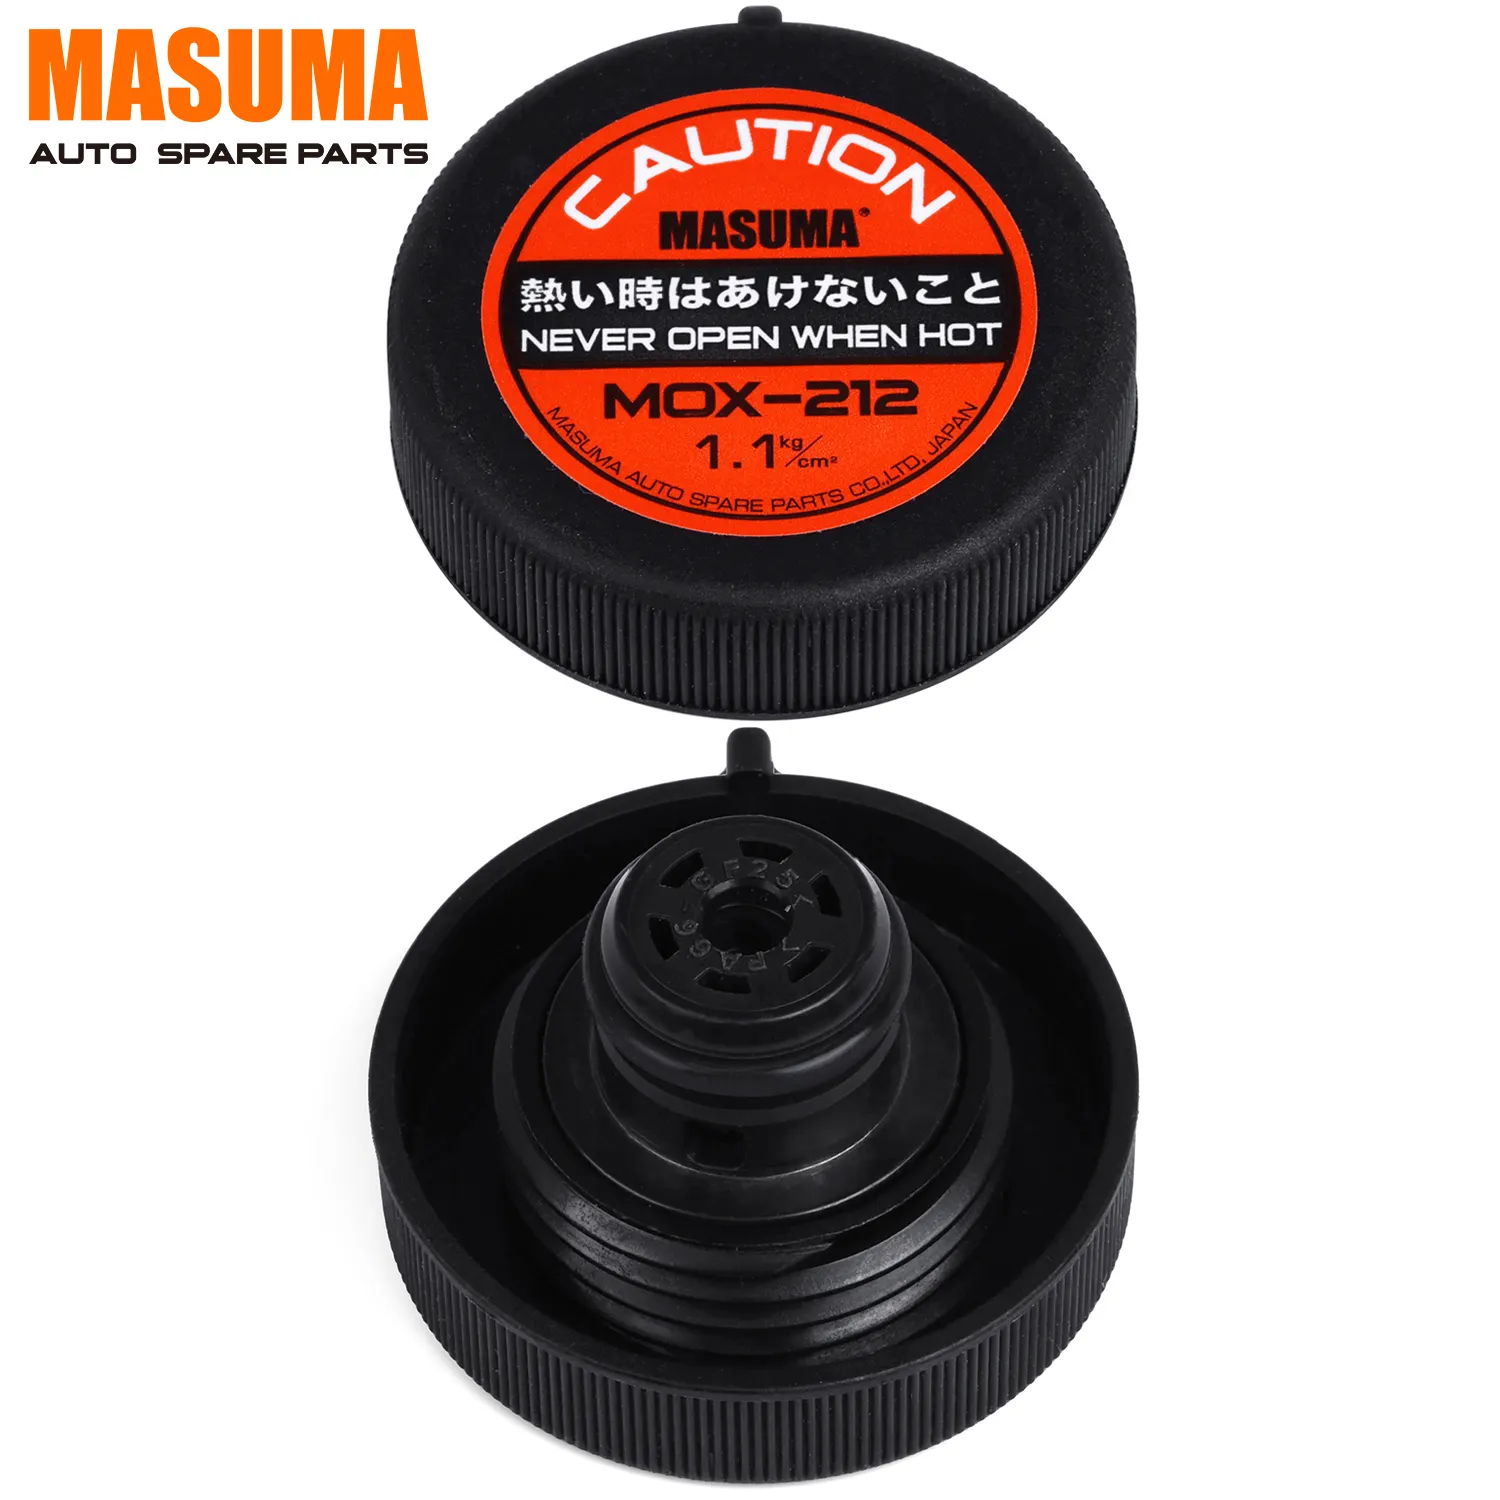 MOX-212 MASUMA ऑटो हिस्सा जलाशय तेल रेडिएटर टोपी 16475-51010 16401-53010 16475-51011 16475-37010 टोयोटा कोरोला के लिए